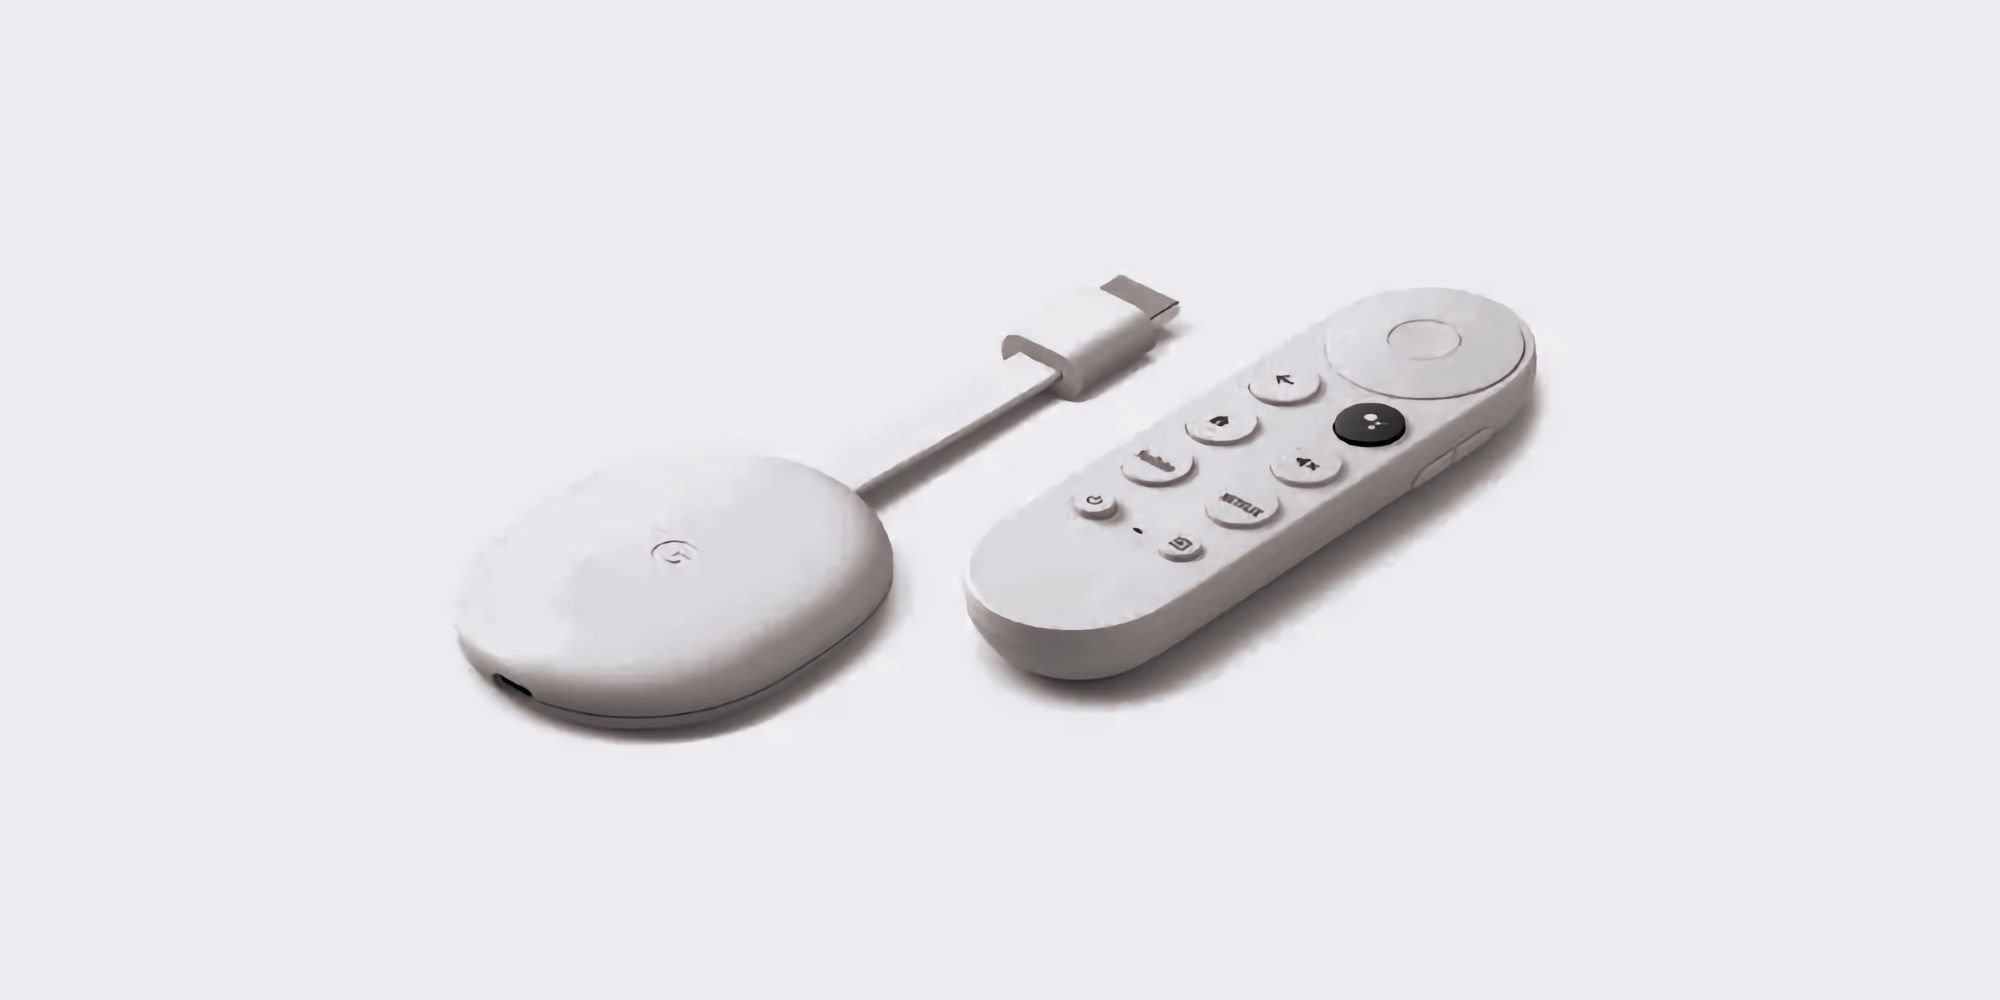 Chromecast-with-Google-TV